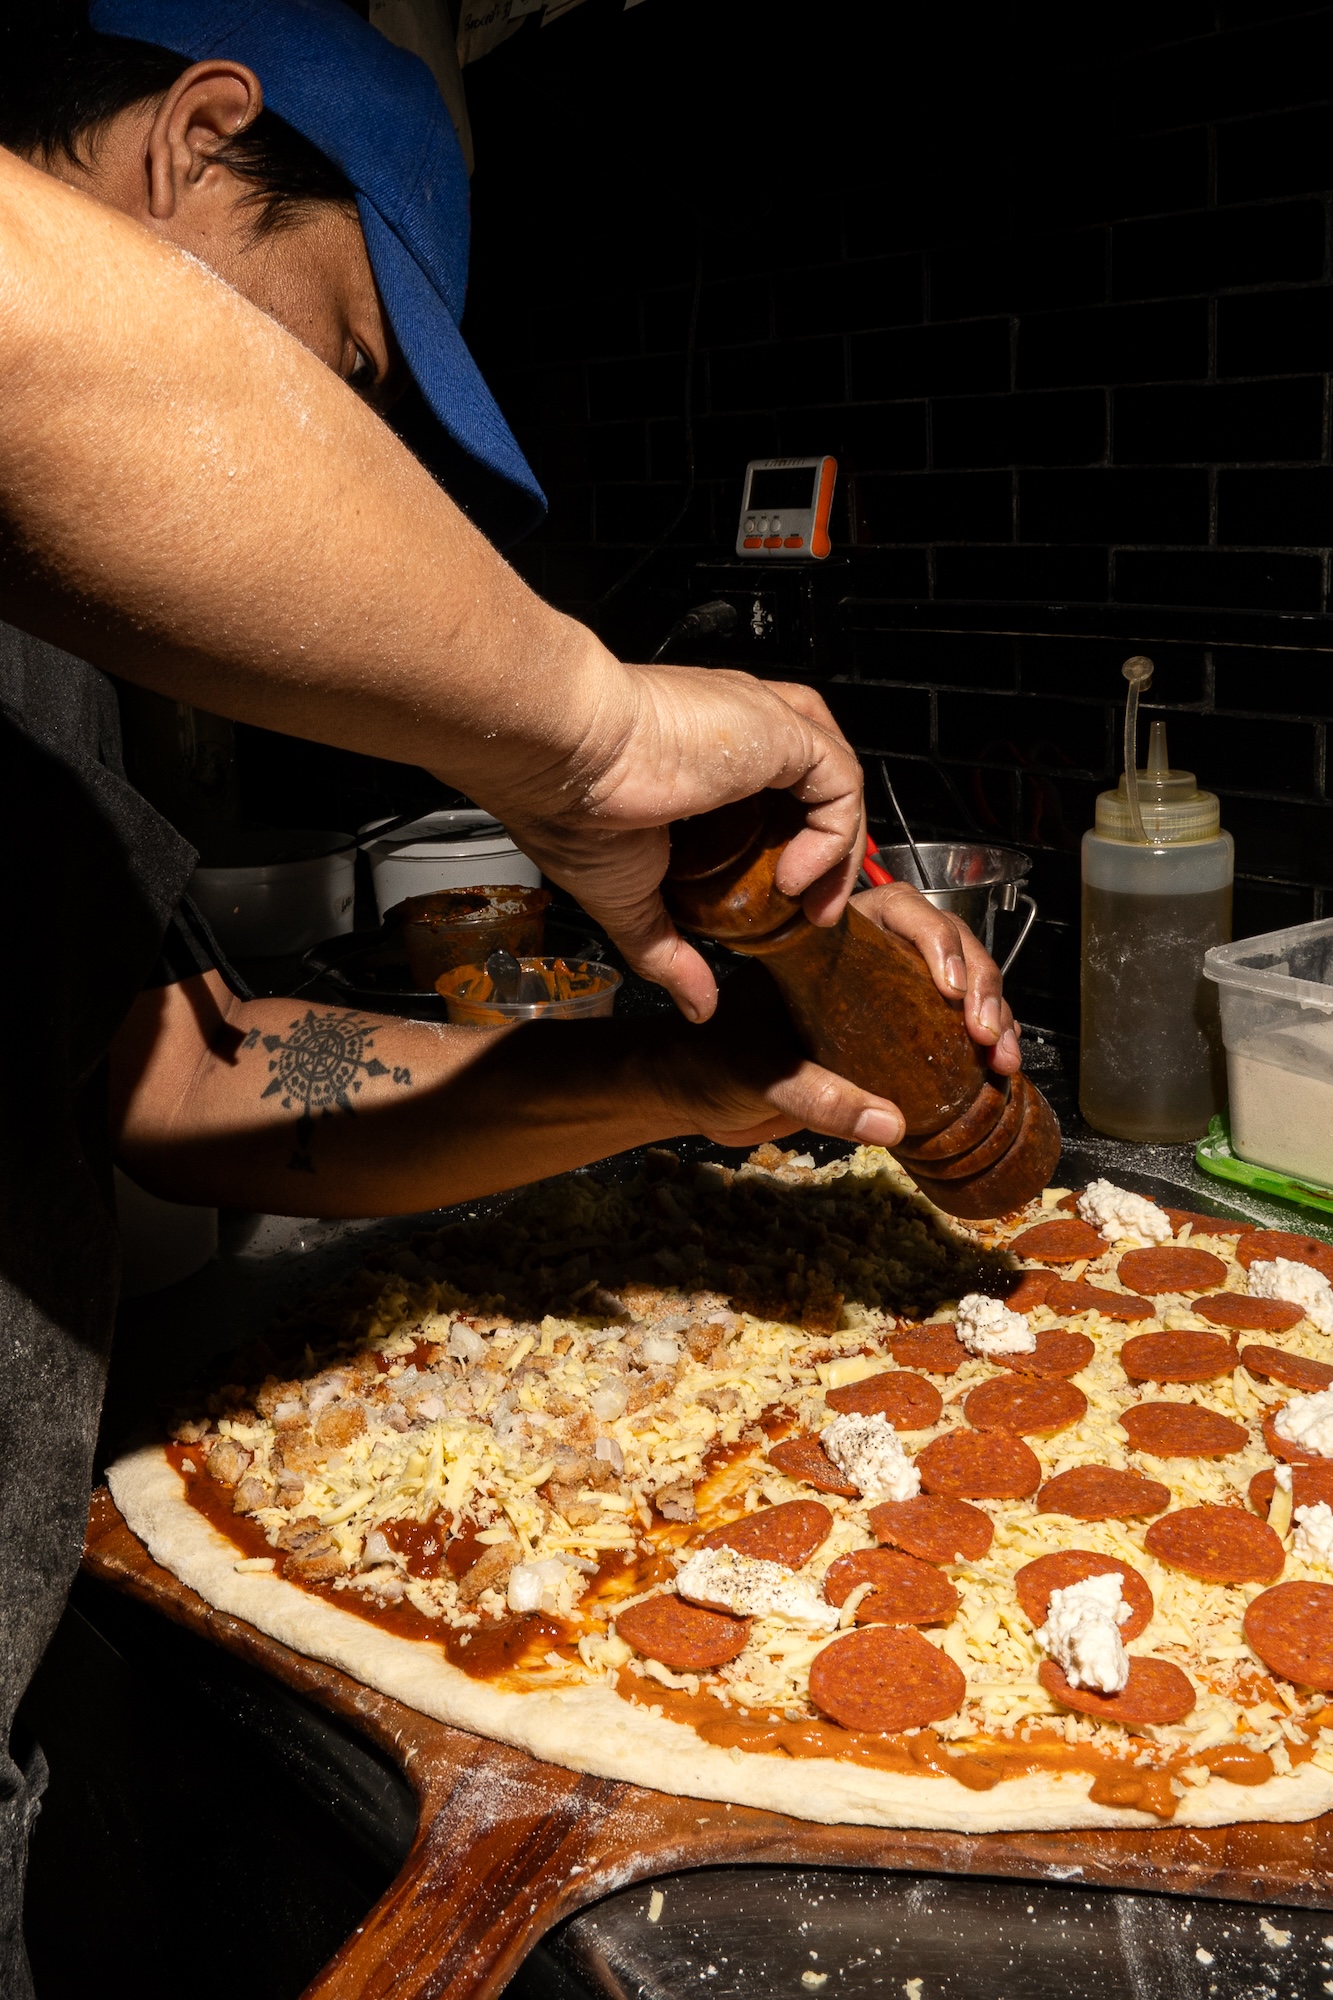 The straightforward process of making pizza